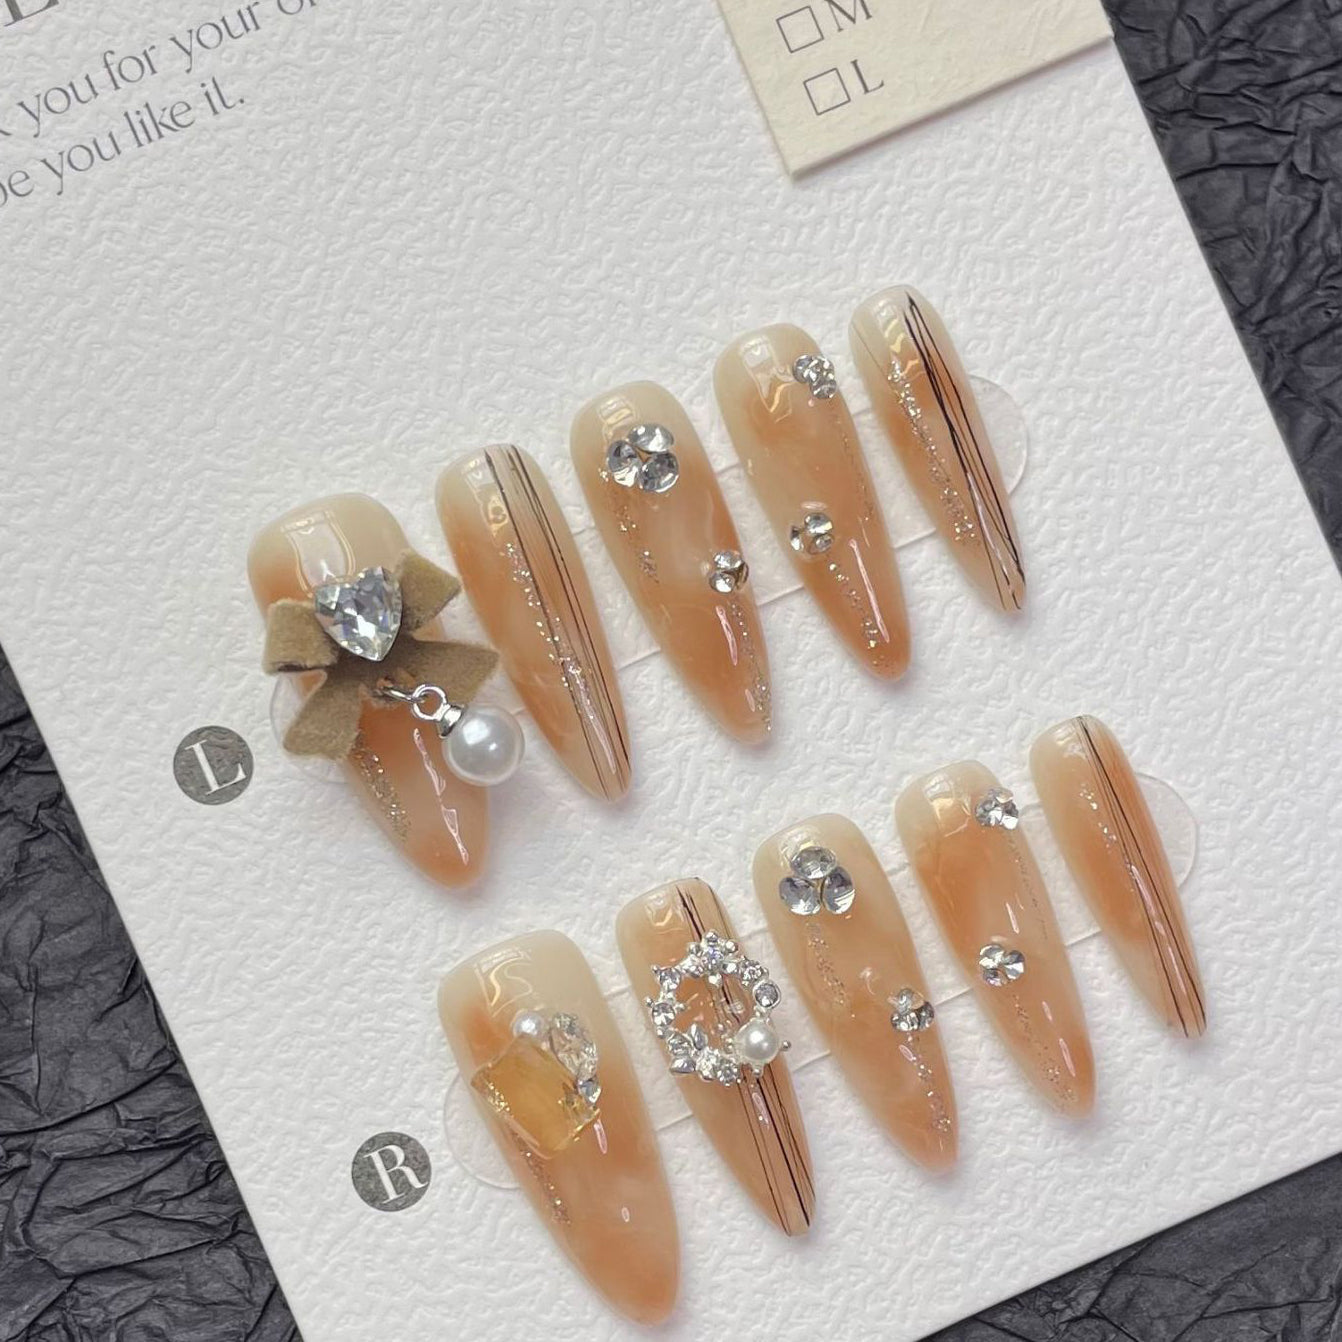 1269 bow style press on nails 100% handmade false nails nude color